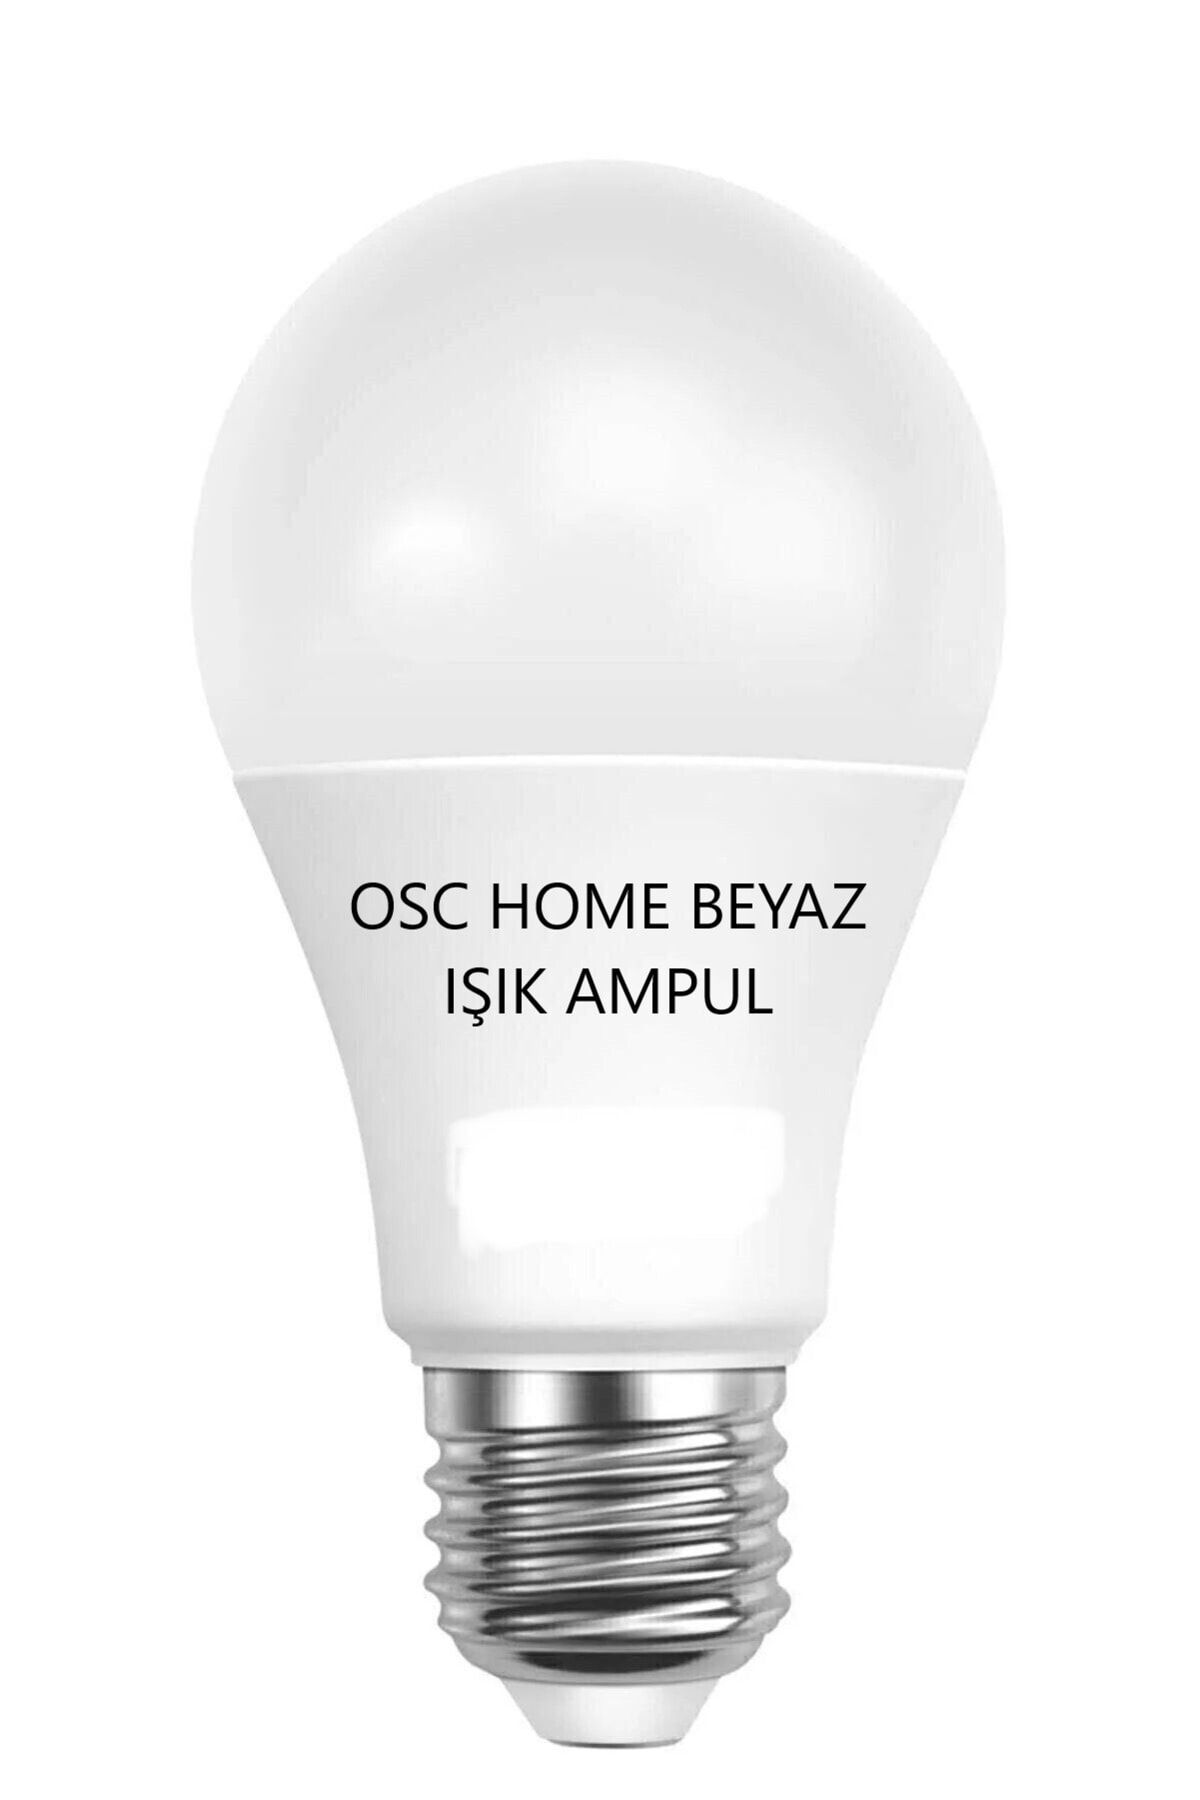 OSC HOME Led Ampul Beyaz Renk 9 Watt Tasarruflu